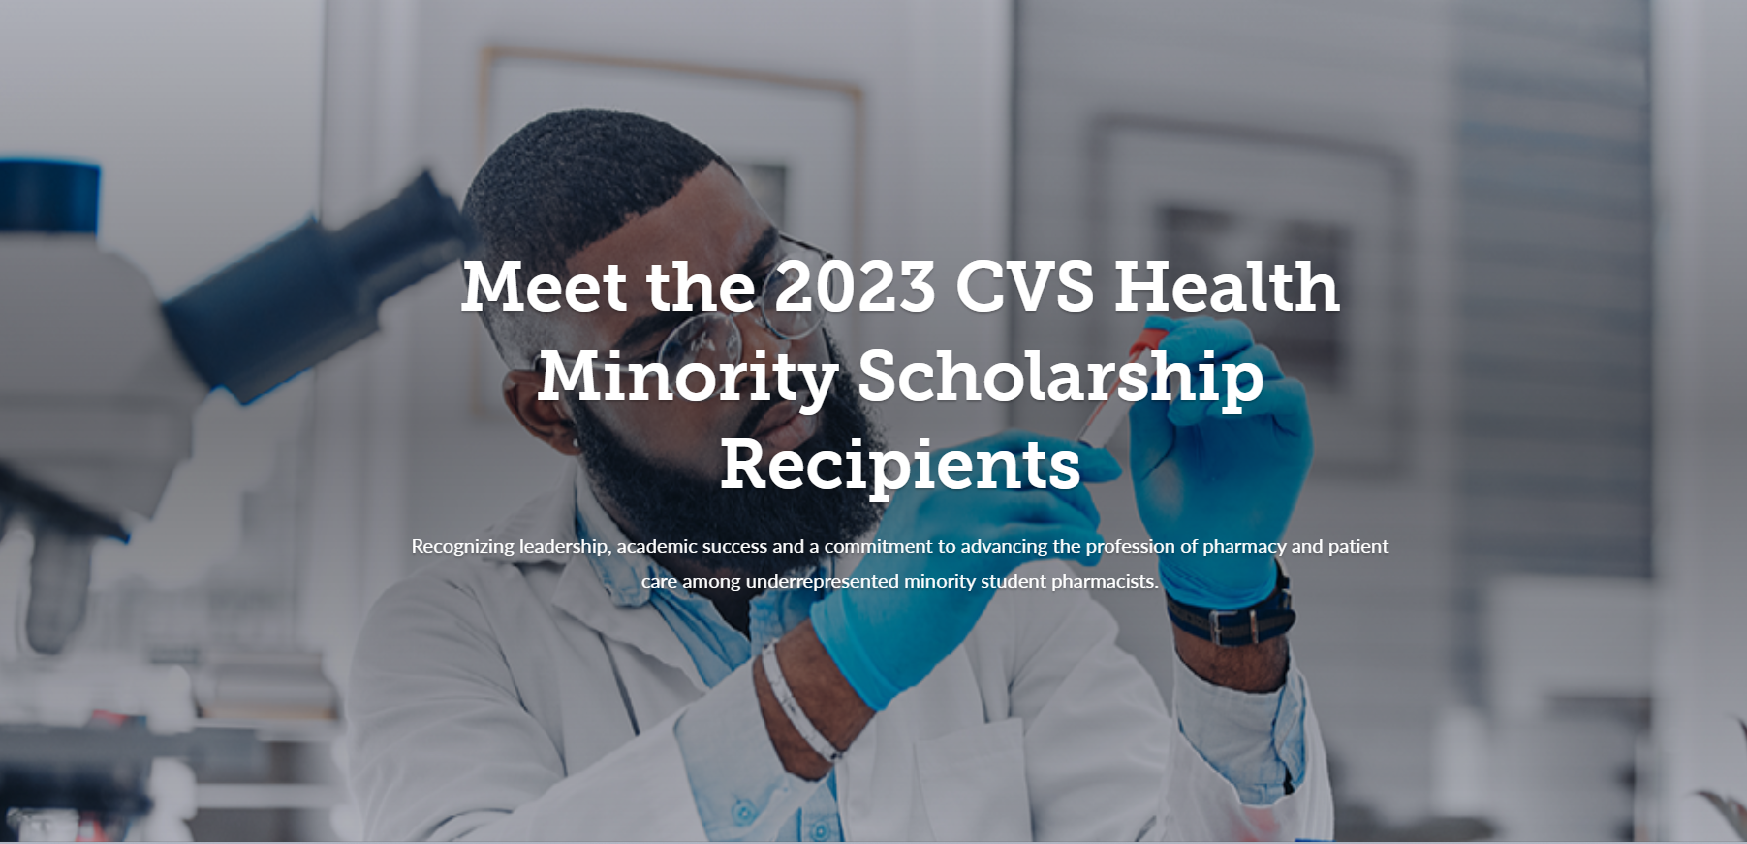 Meet the 2023 CVS Health Minority Scholarship